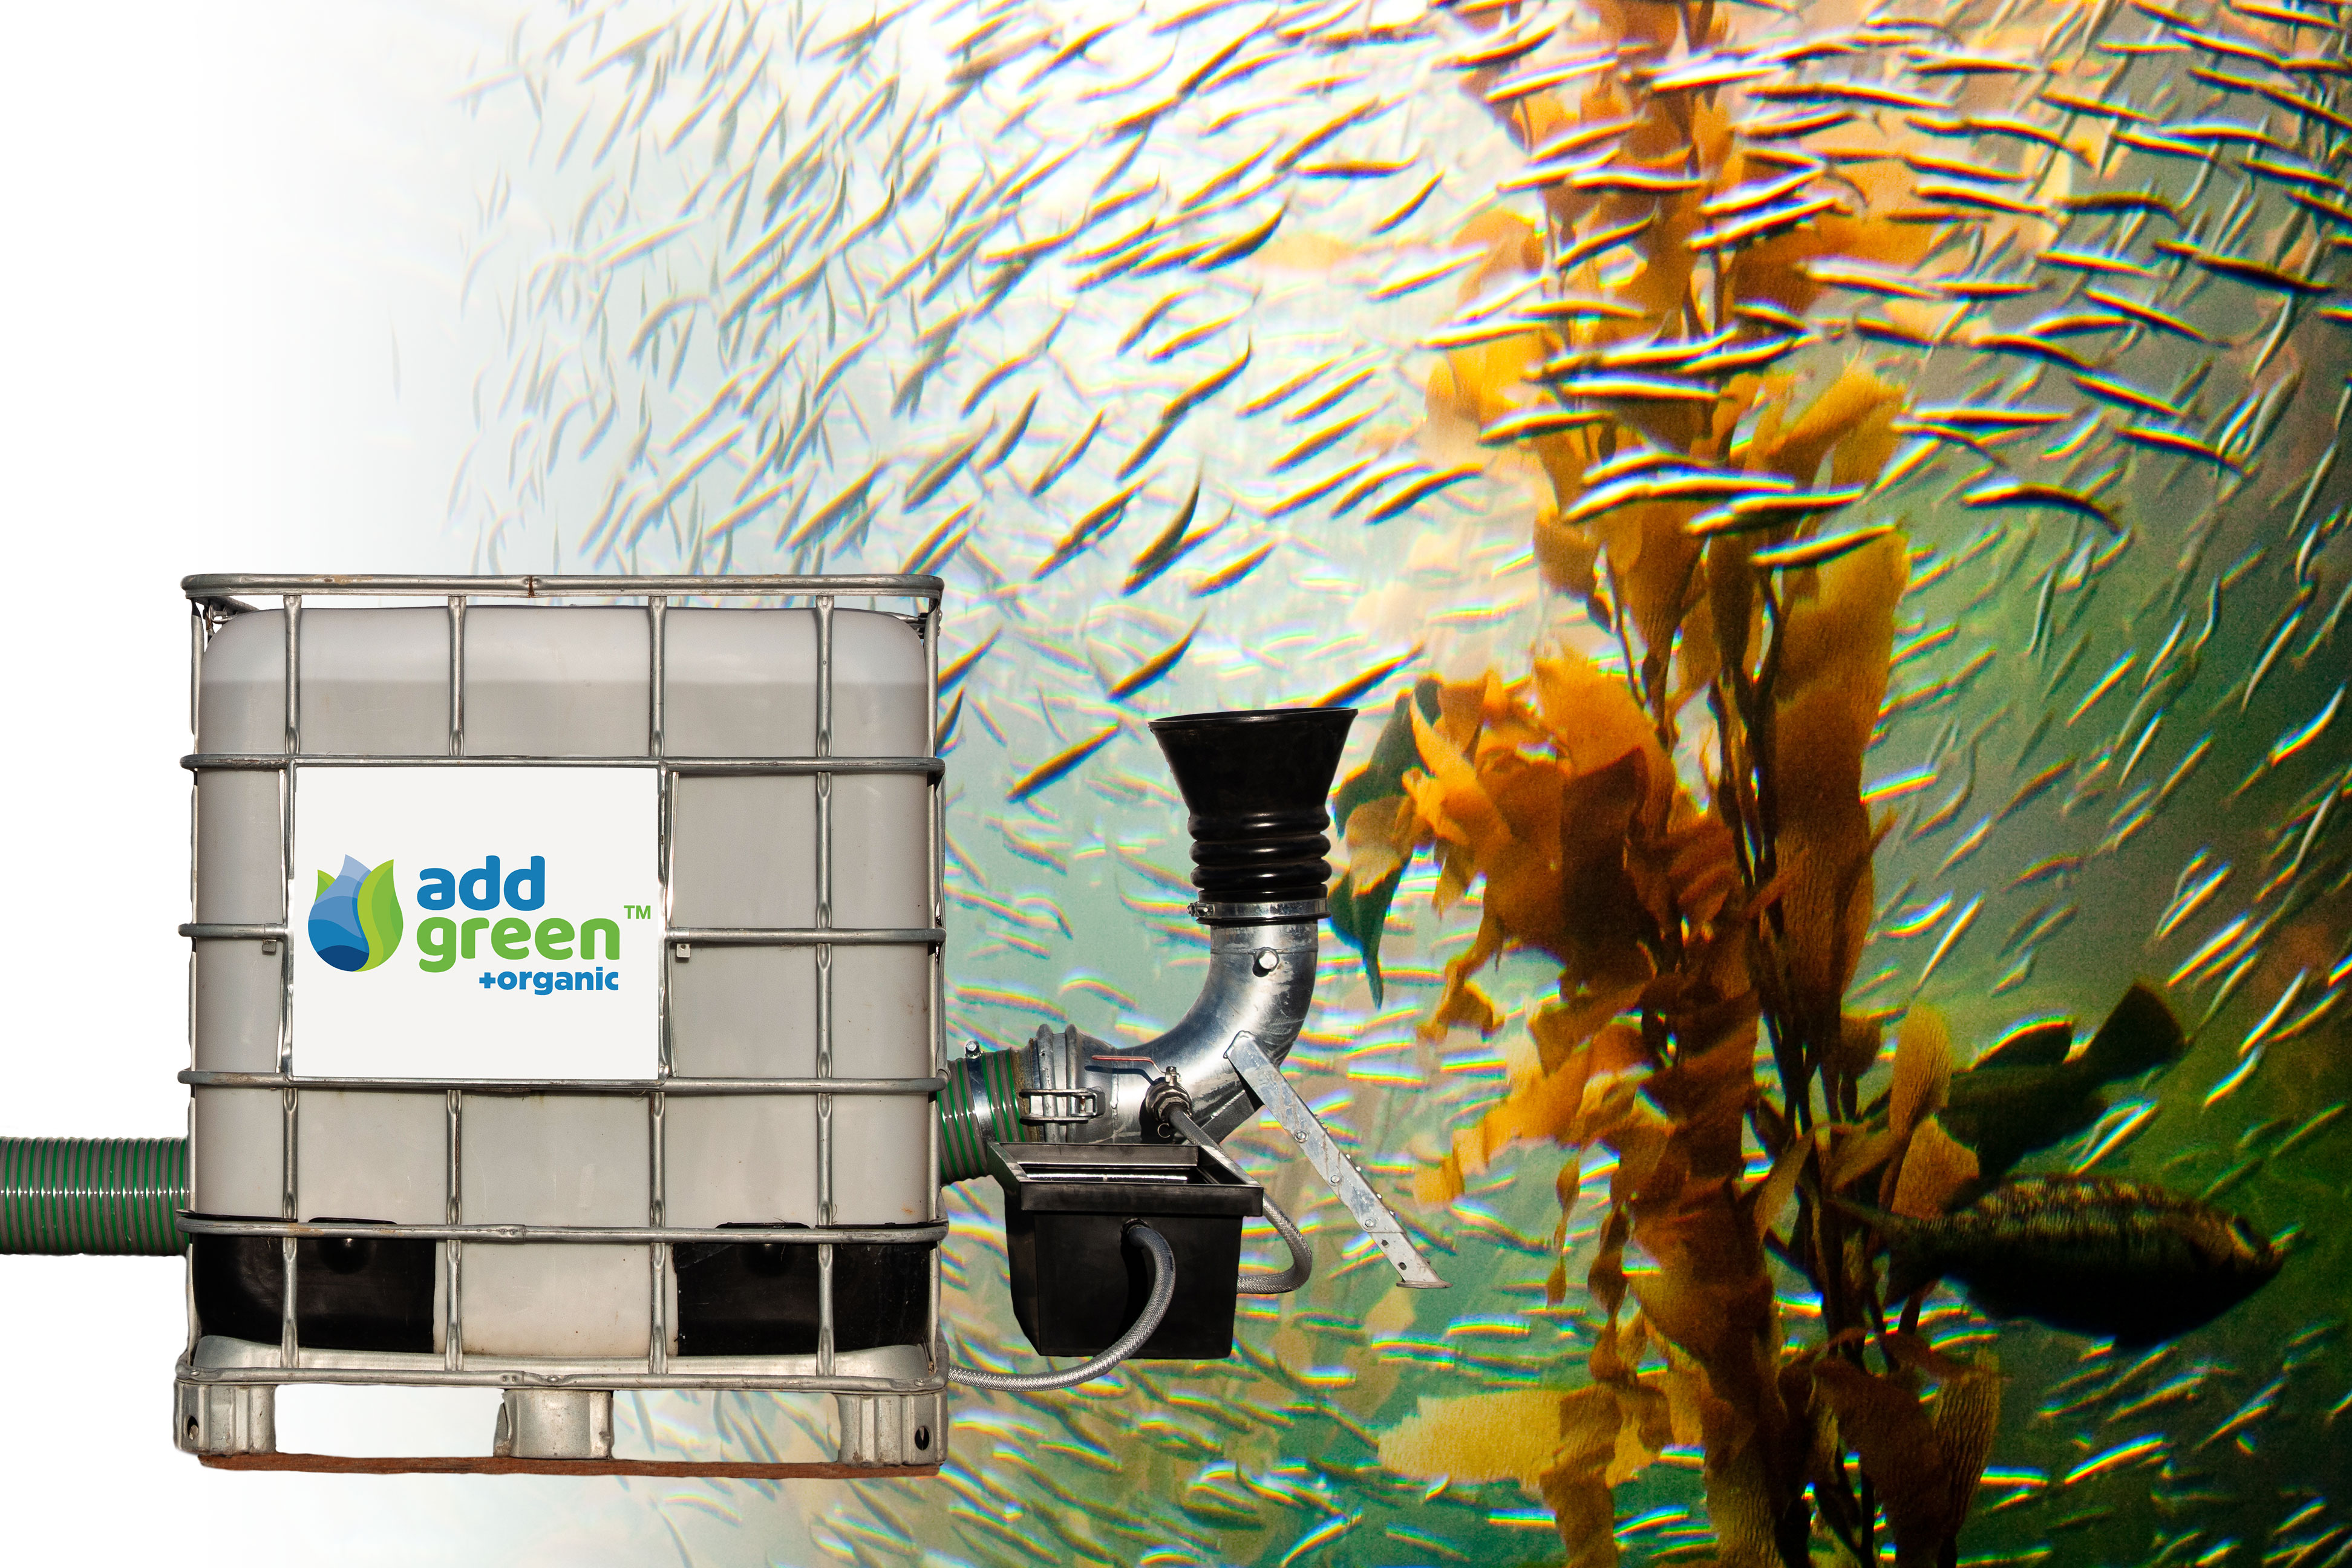 AddGreen +Organic Made From Fish & Seaweed